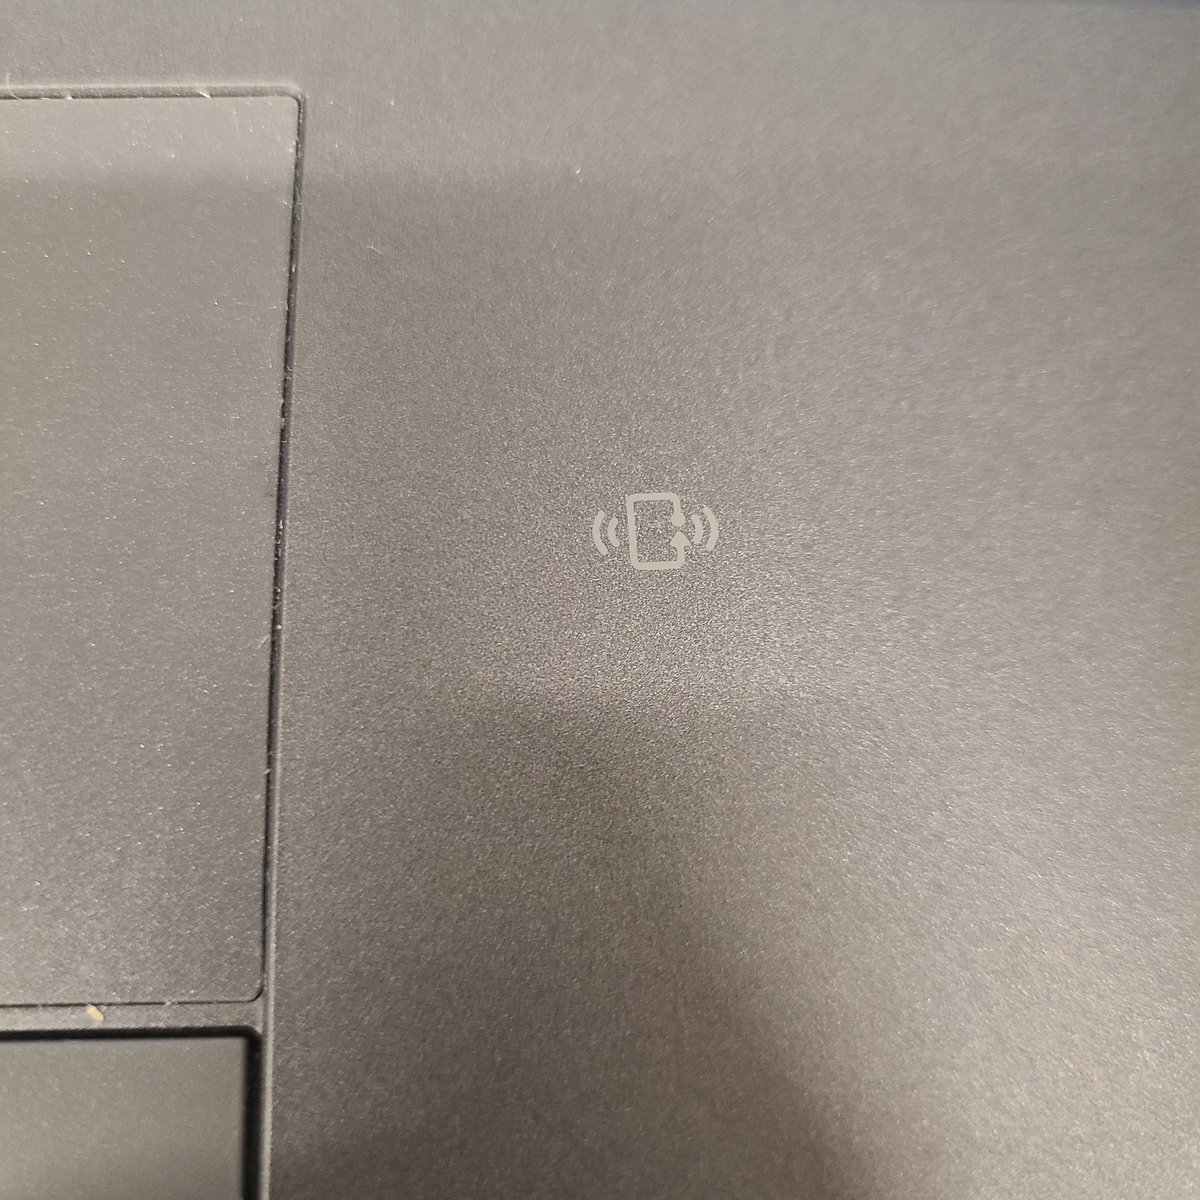 What is this symbol representative of? On a Dell Laptop Precision 7540. #DellPrecision #DellLaptops #Dell #Laptop